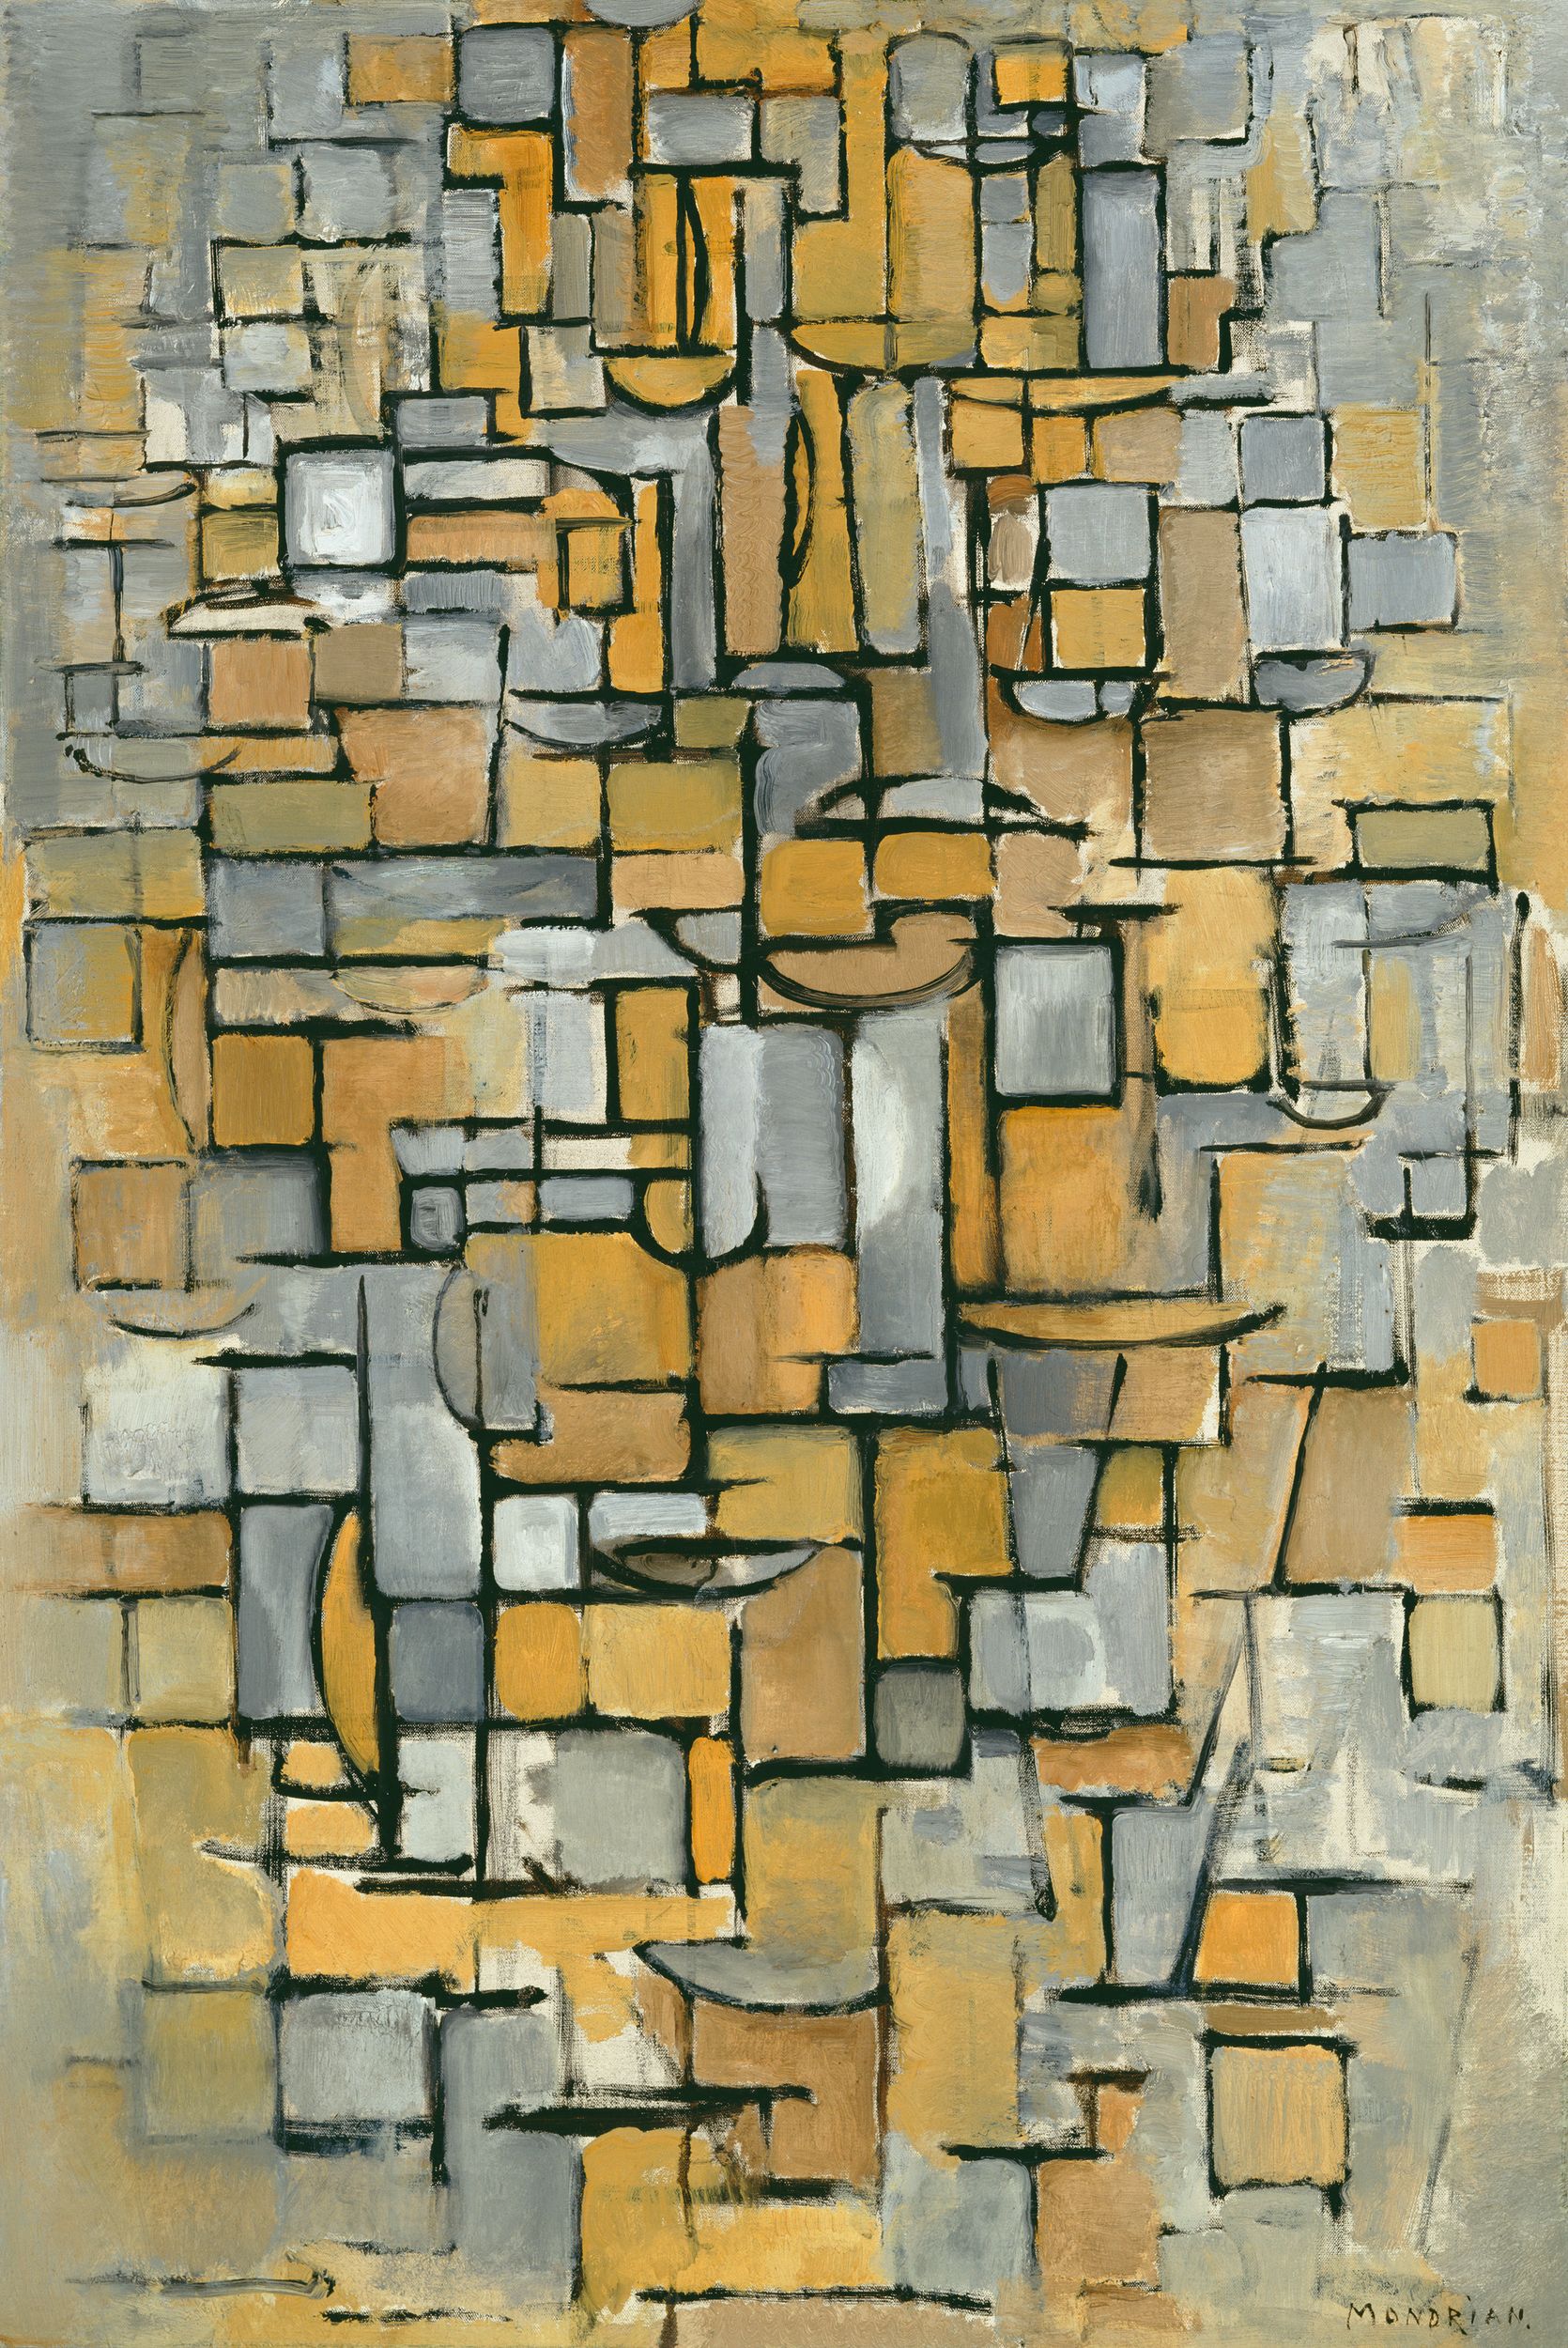 Tablo no. 1 (orig. "Tableau no. 1") by Piet Mondrian - 1913 - 96 x 64 cm Kröller-Müller Museum